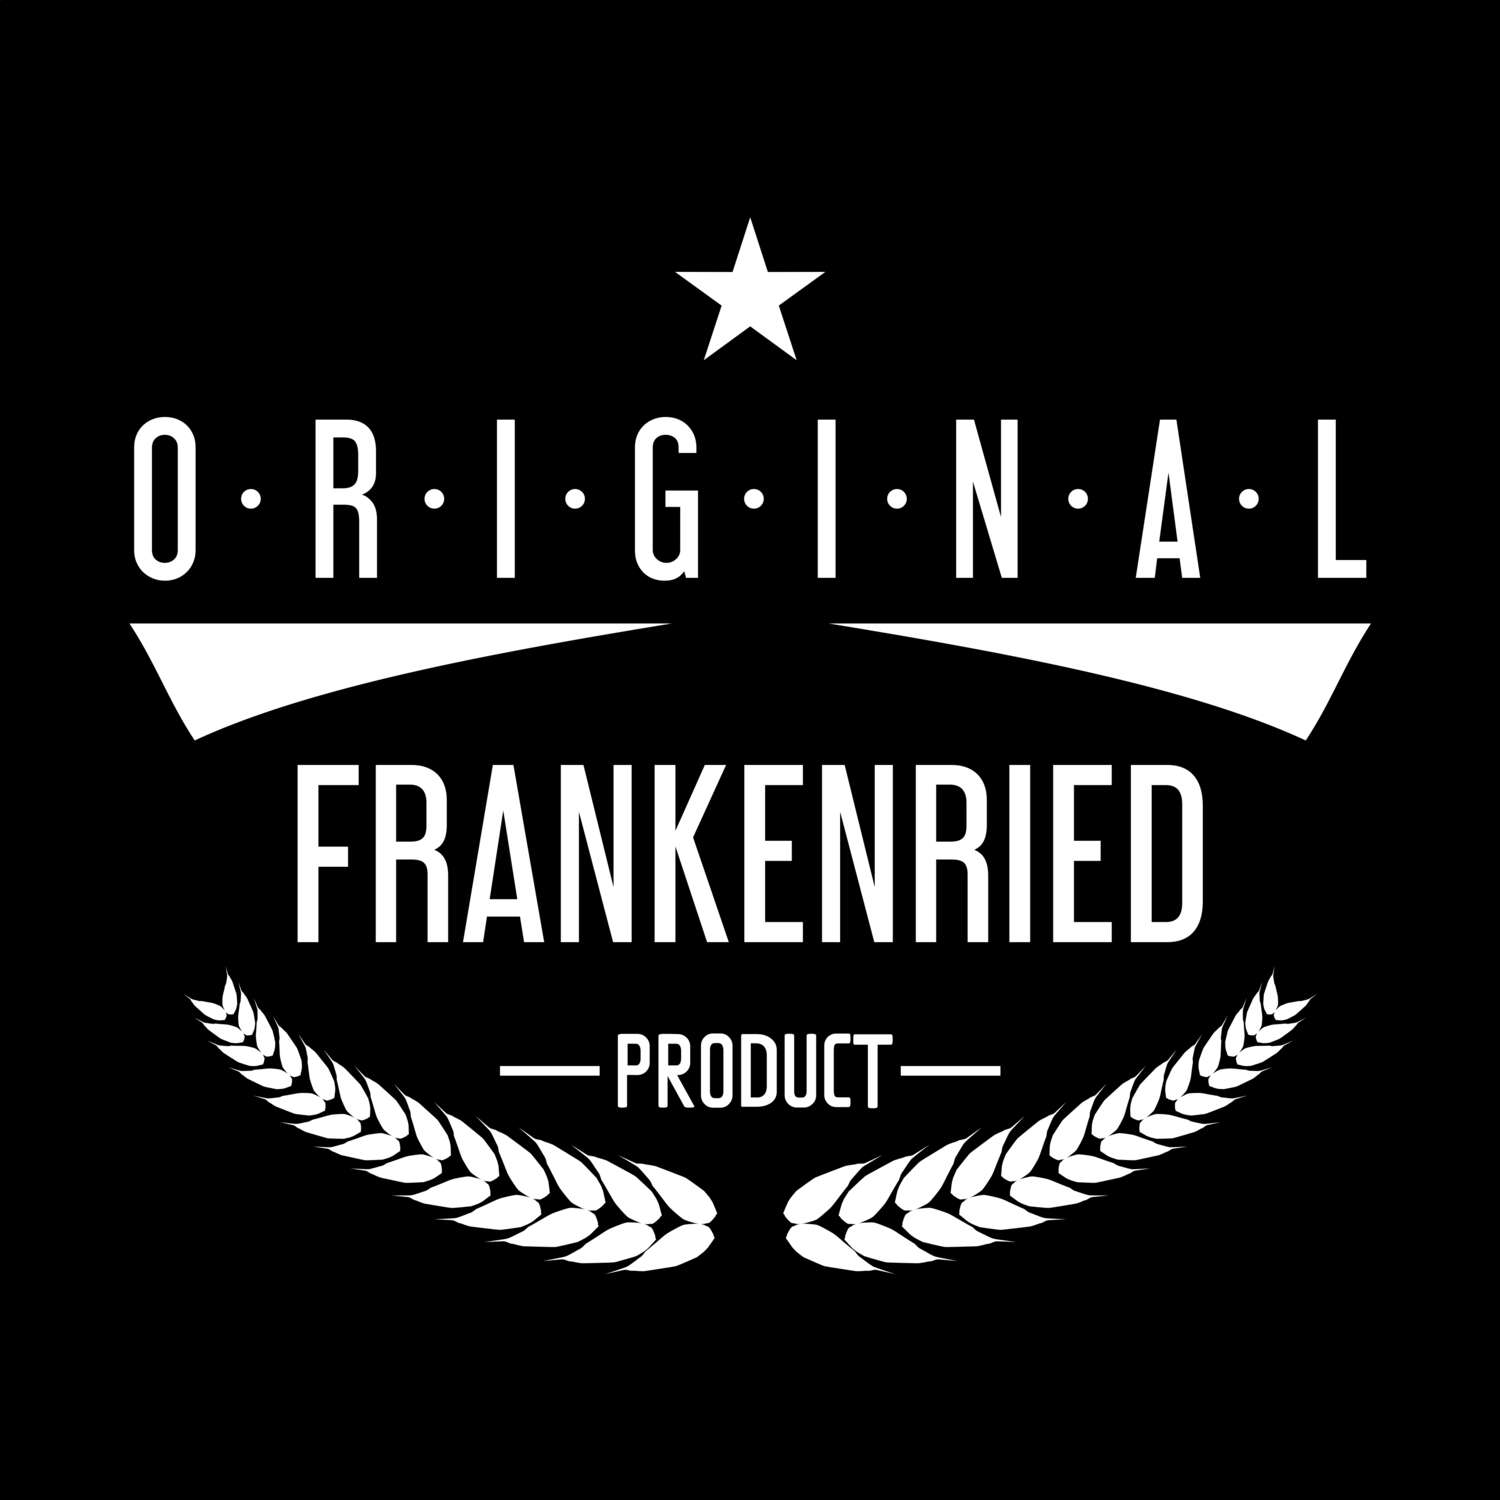 Frankenried T-Shirt »Original Product«